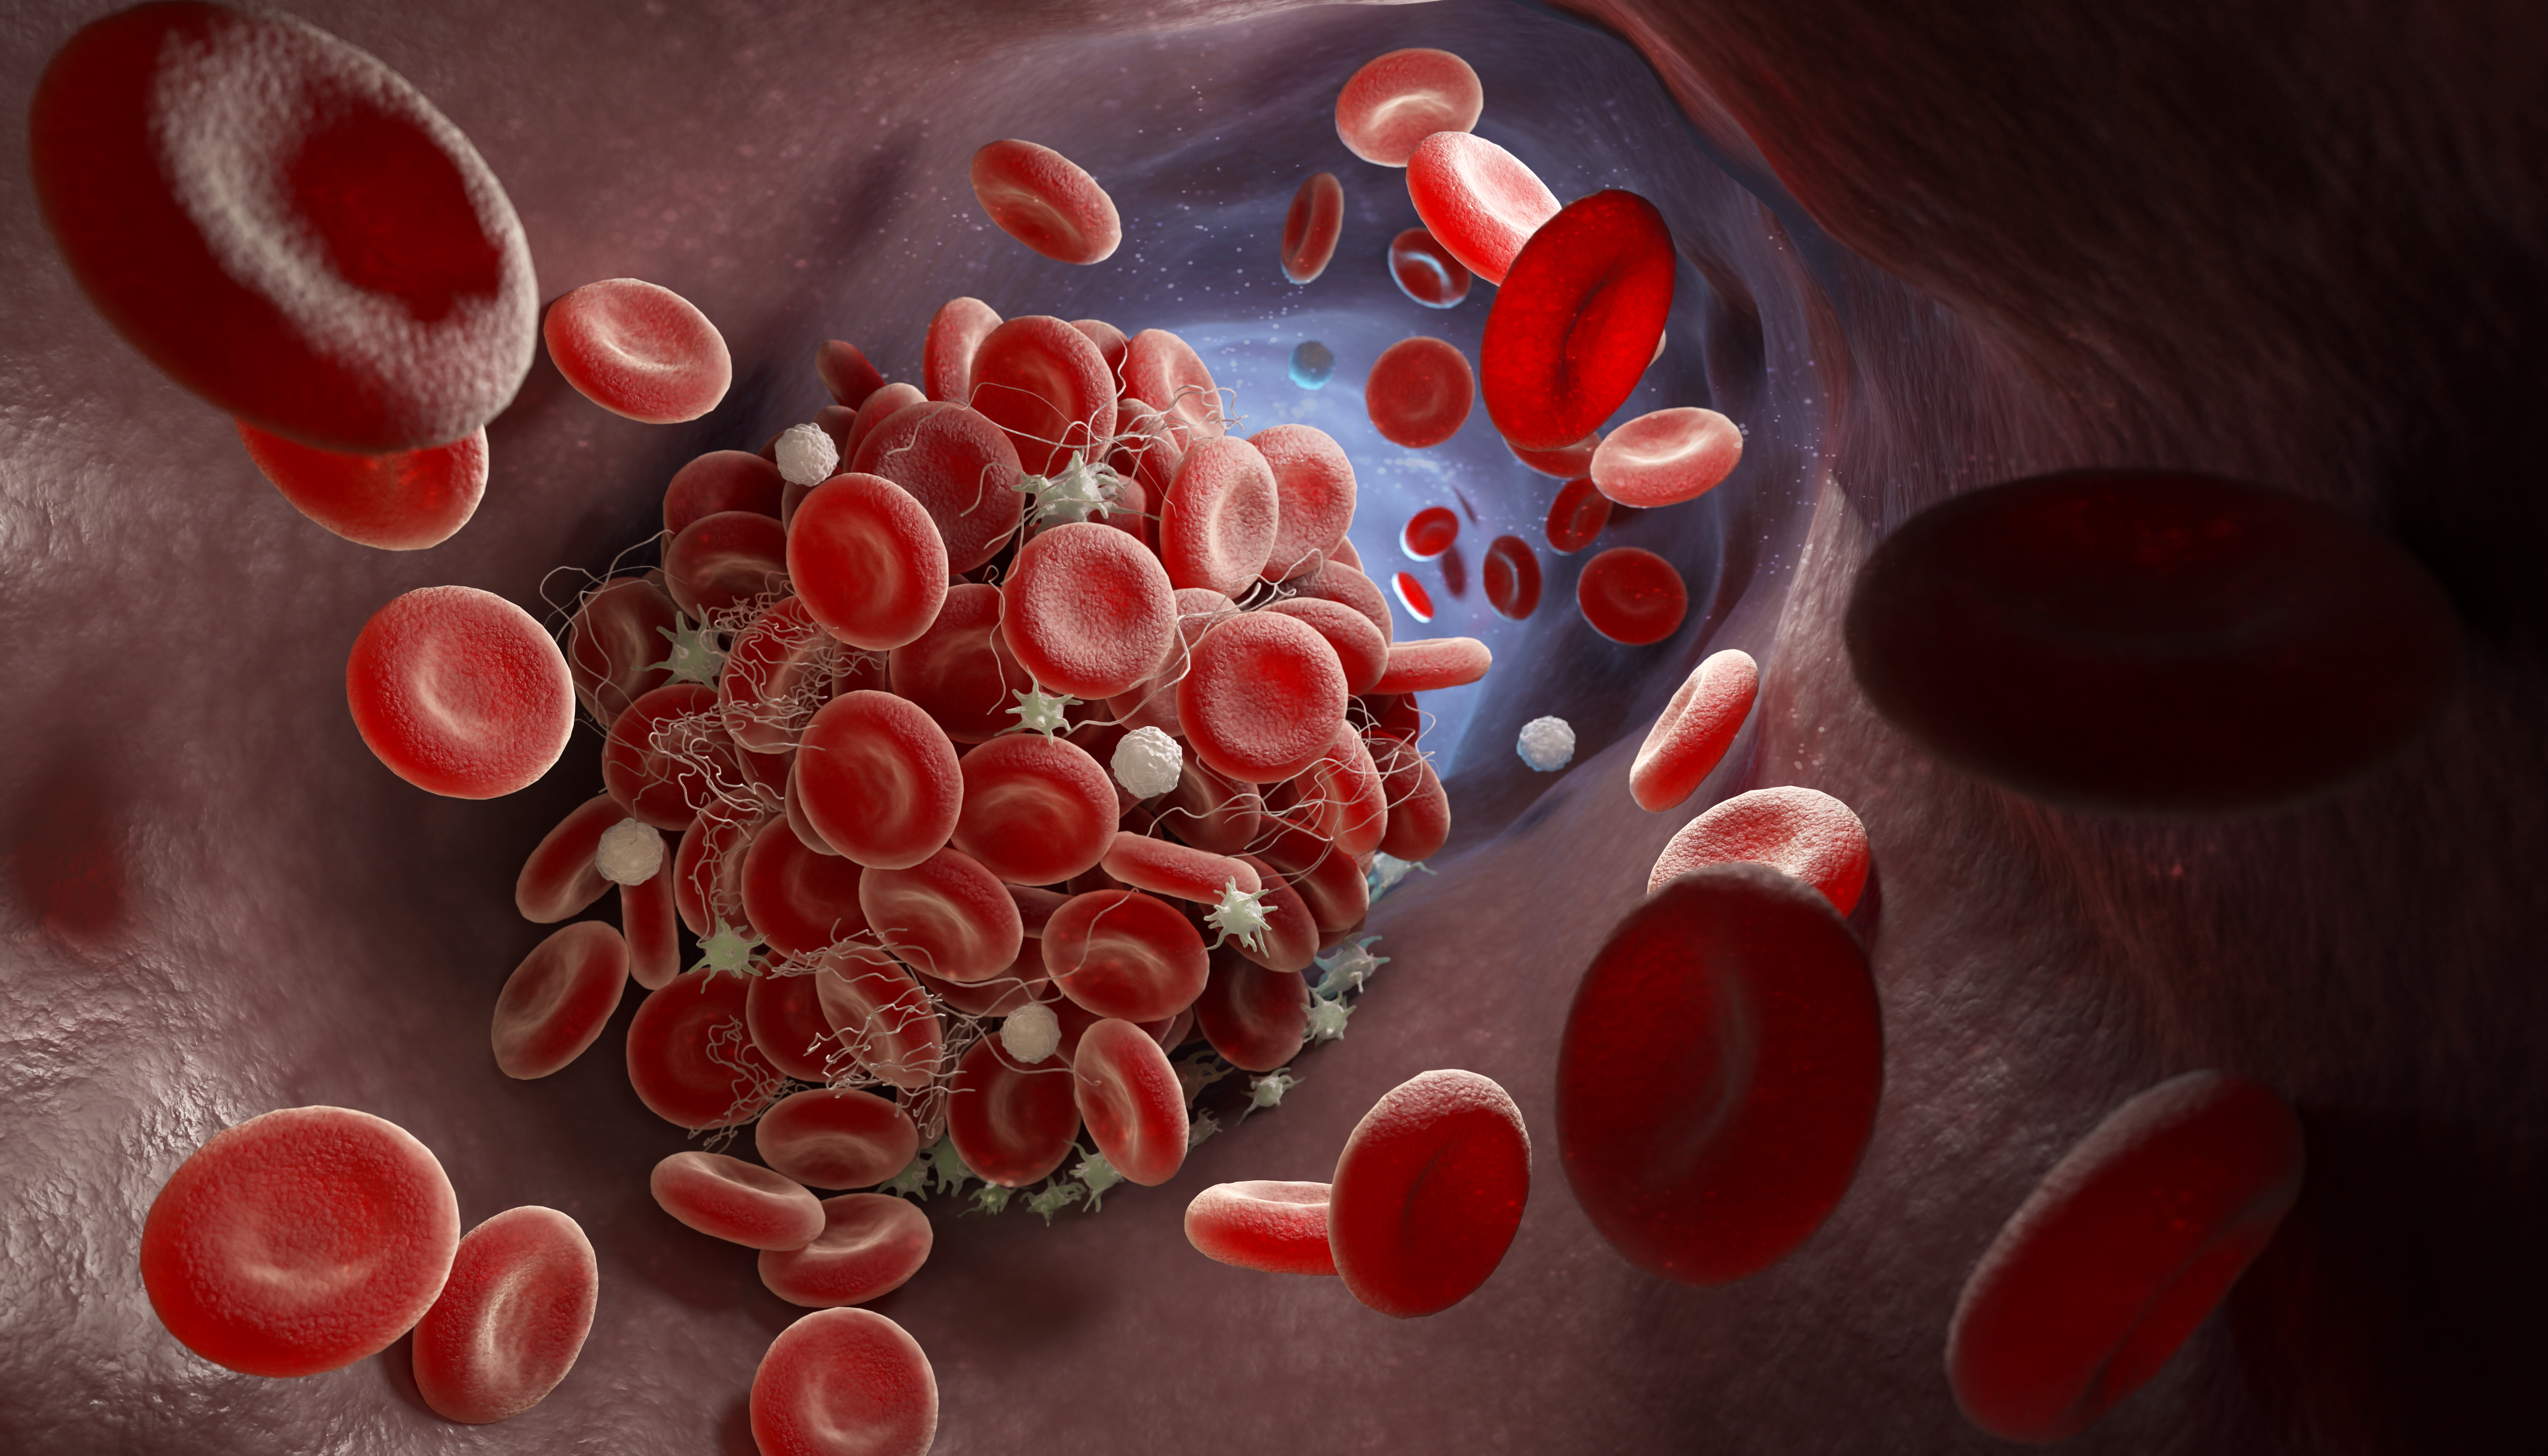 Novel factor VIIa chimeras for safer hemostasis